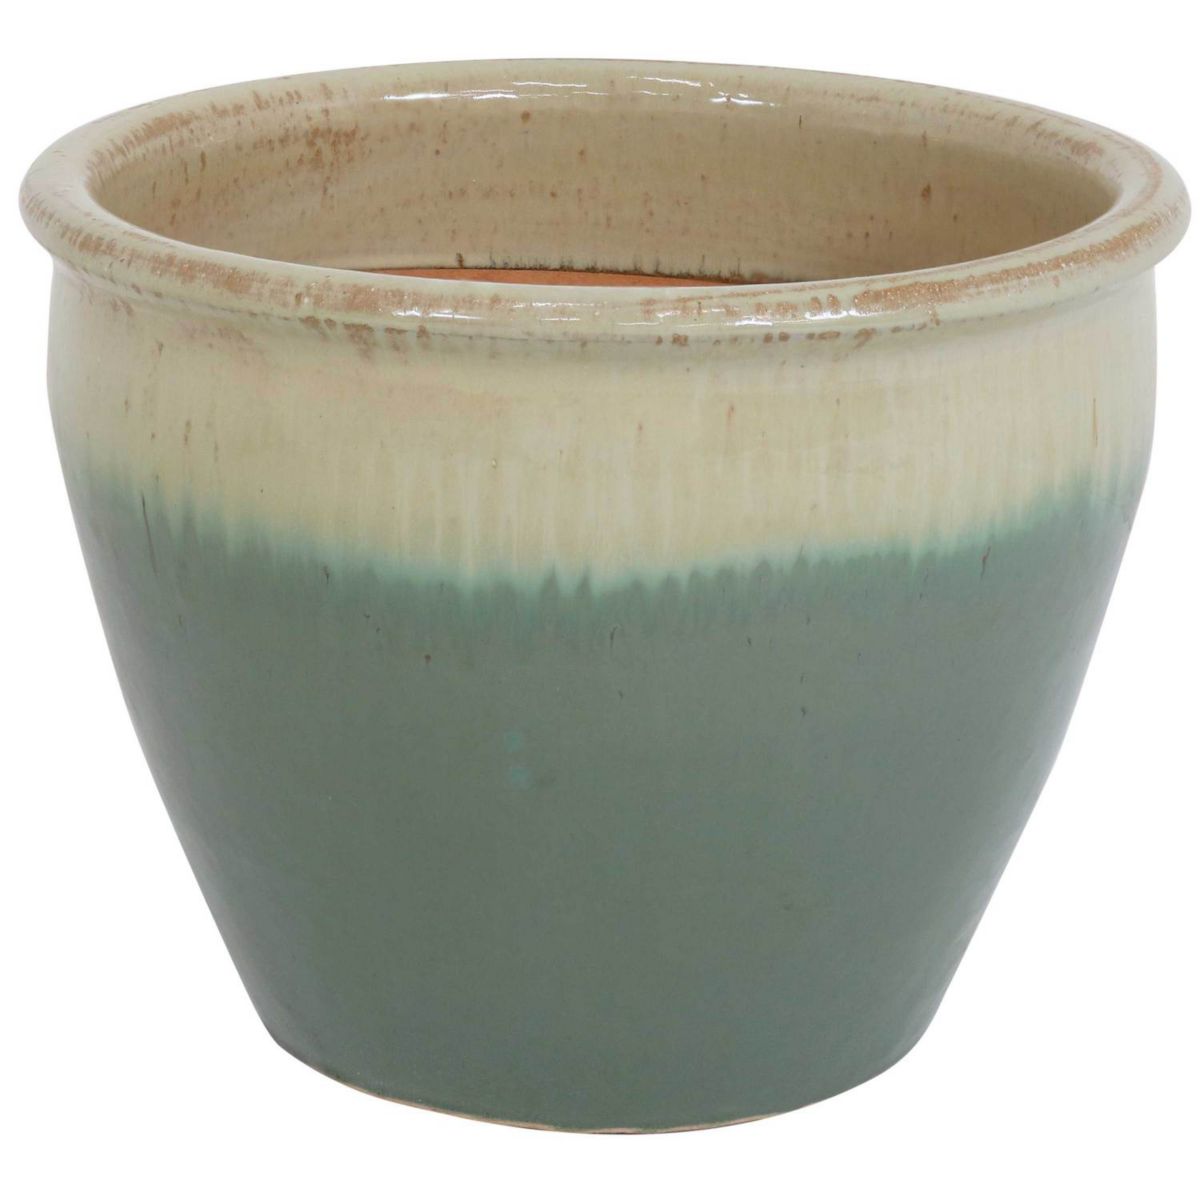 Sunnydaze 15 in Chalet High-Fired Glazed Ceramic Planter - Seafoam Sunnydaze Decor